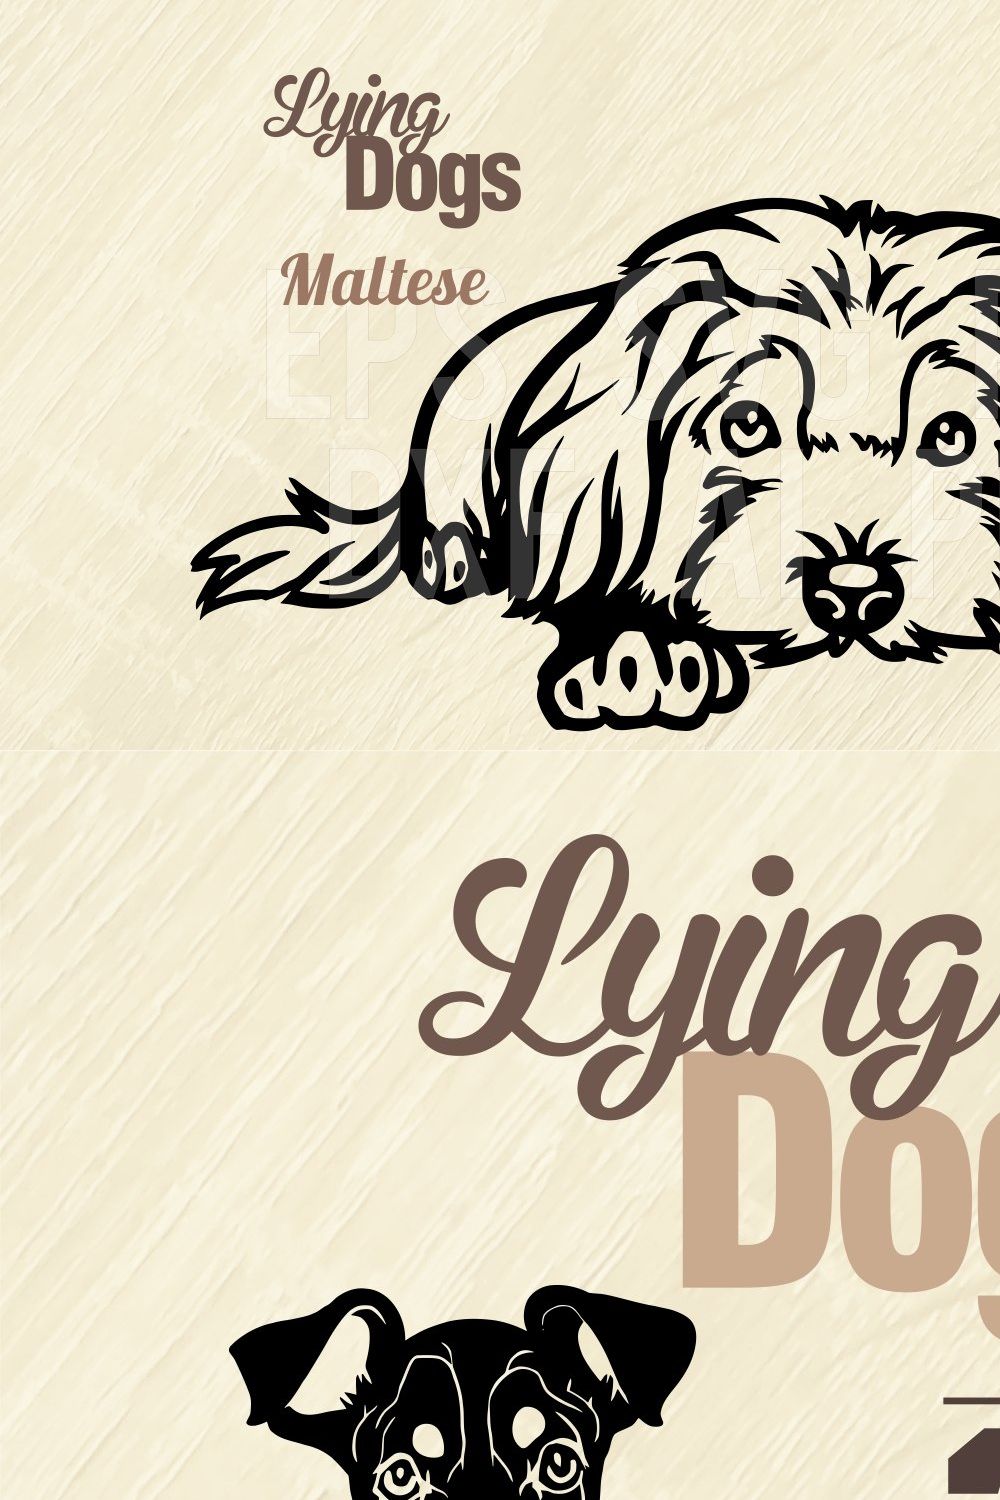 Maltese - Lying Dog Cut SVG Stencil pinterest preview image.